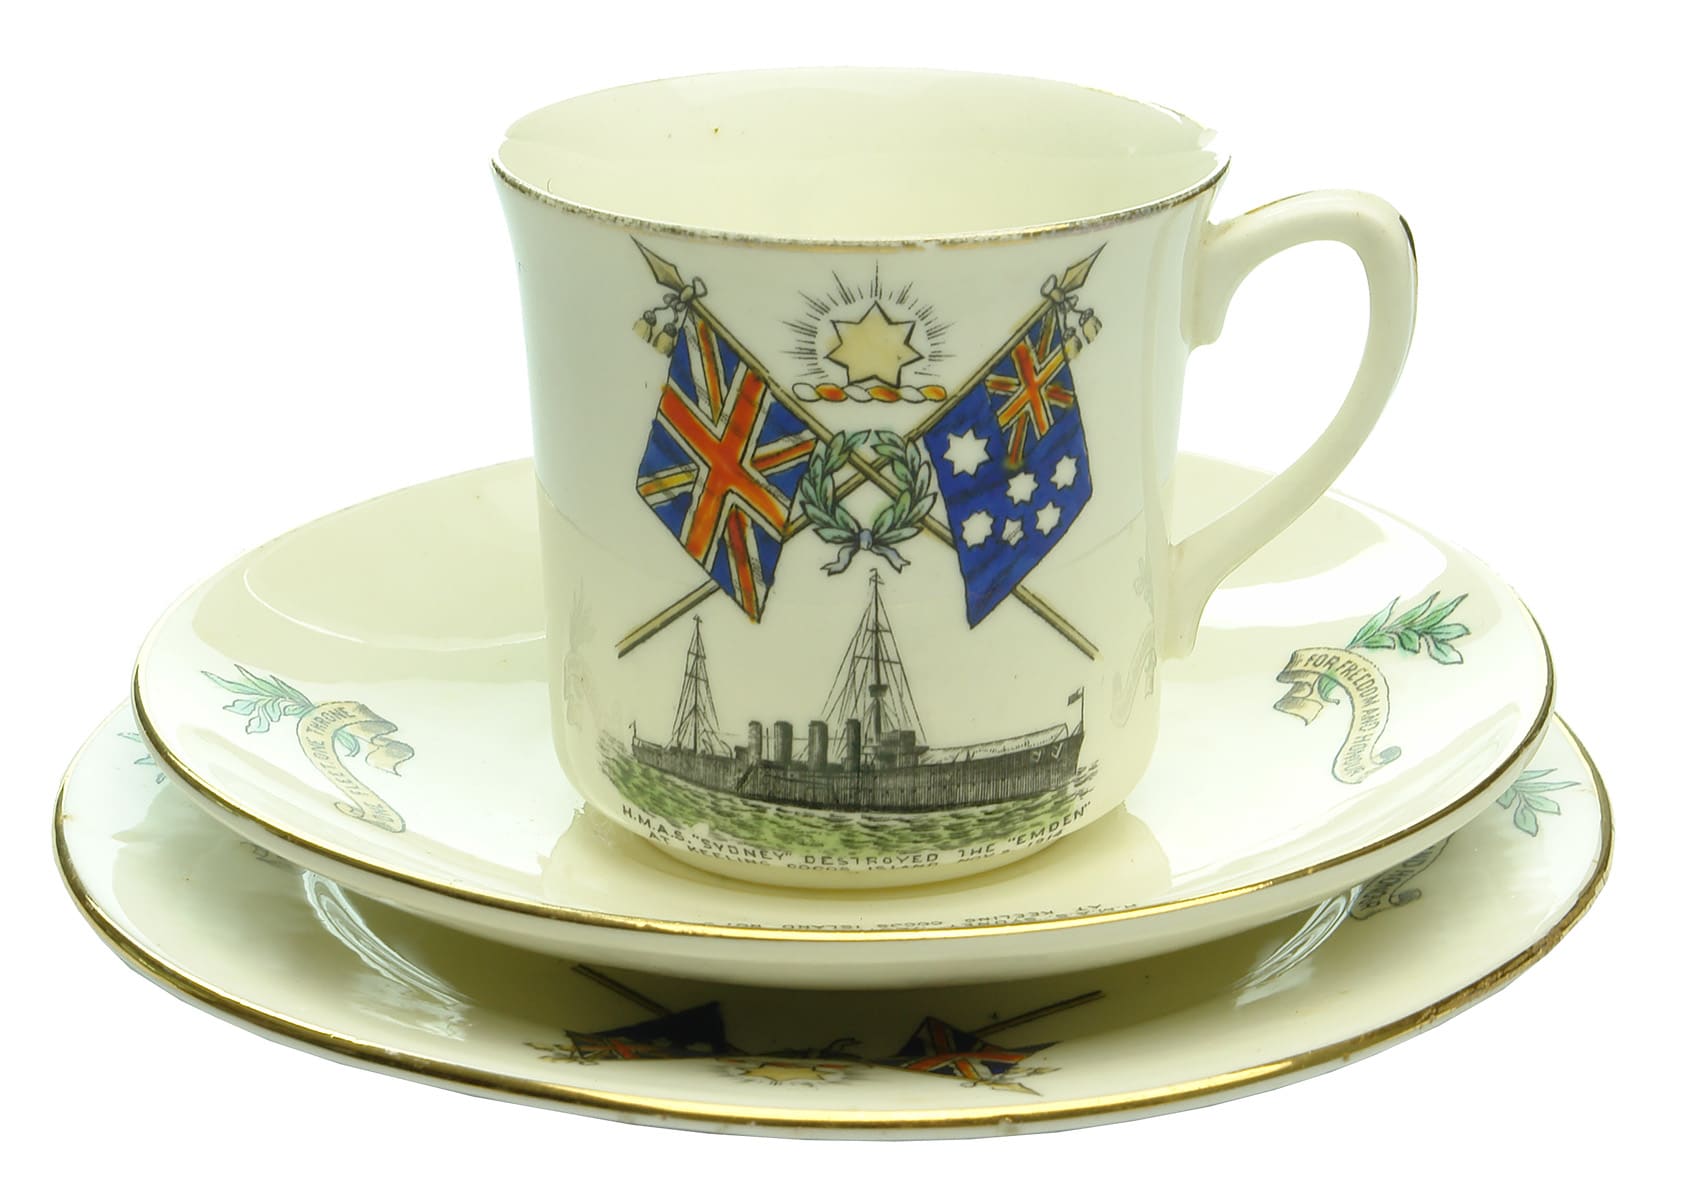 HMAS Sydney Emden Commemorative Porcelain